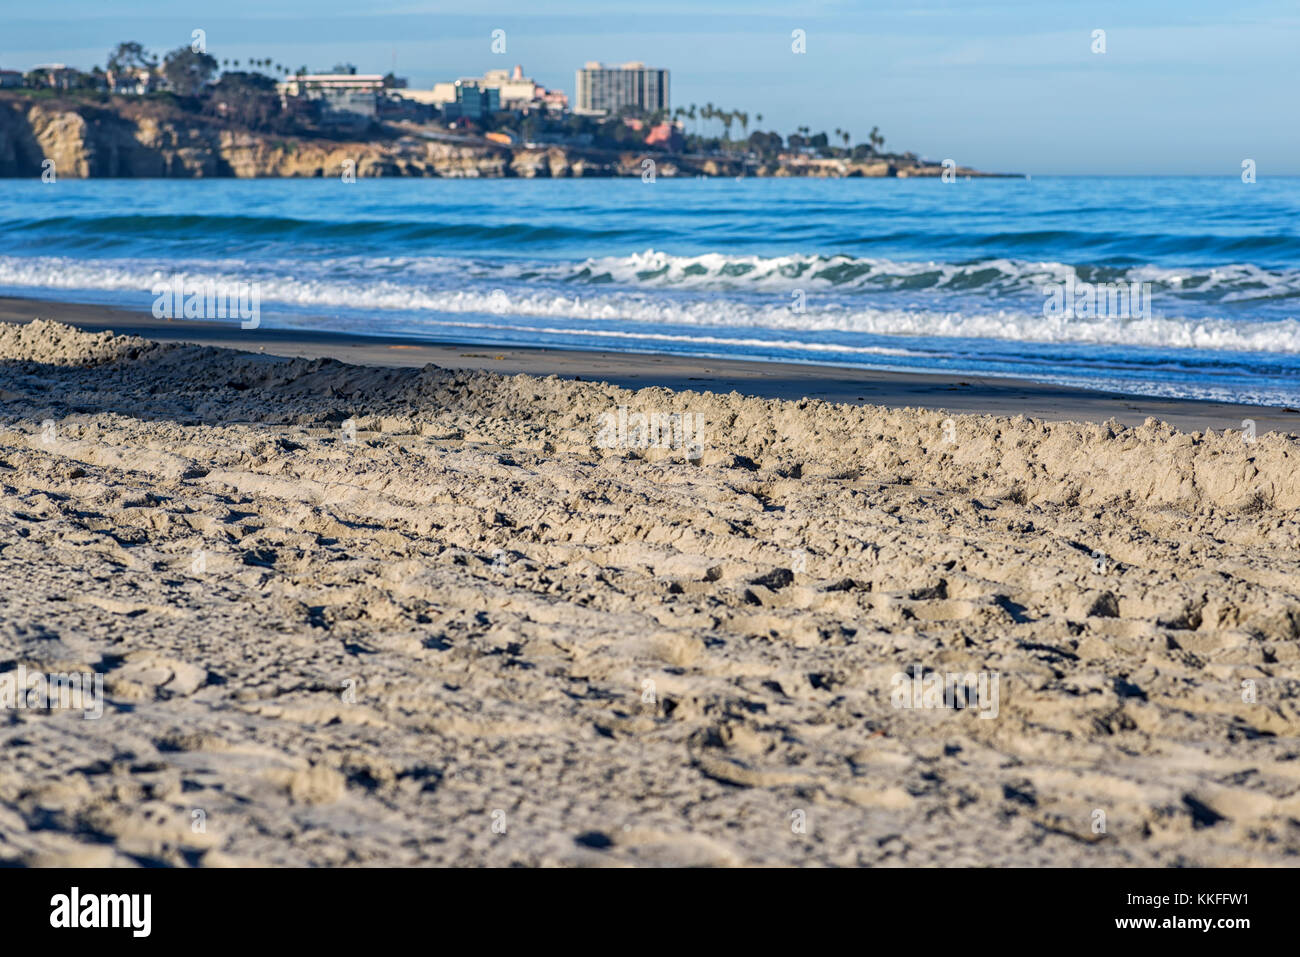 La Jolla Shore Beach. La Jolla, California. Focus of the image is on the foreground. Stock Photo